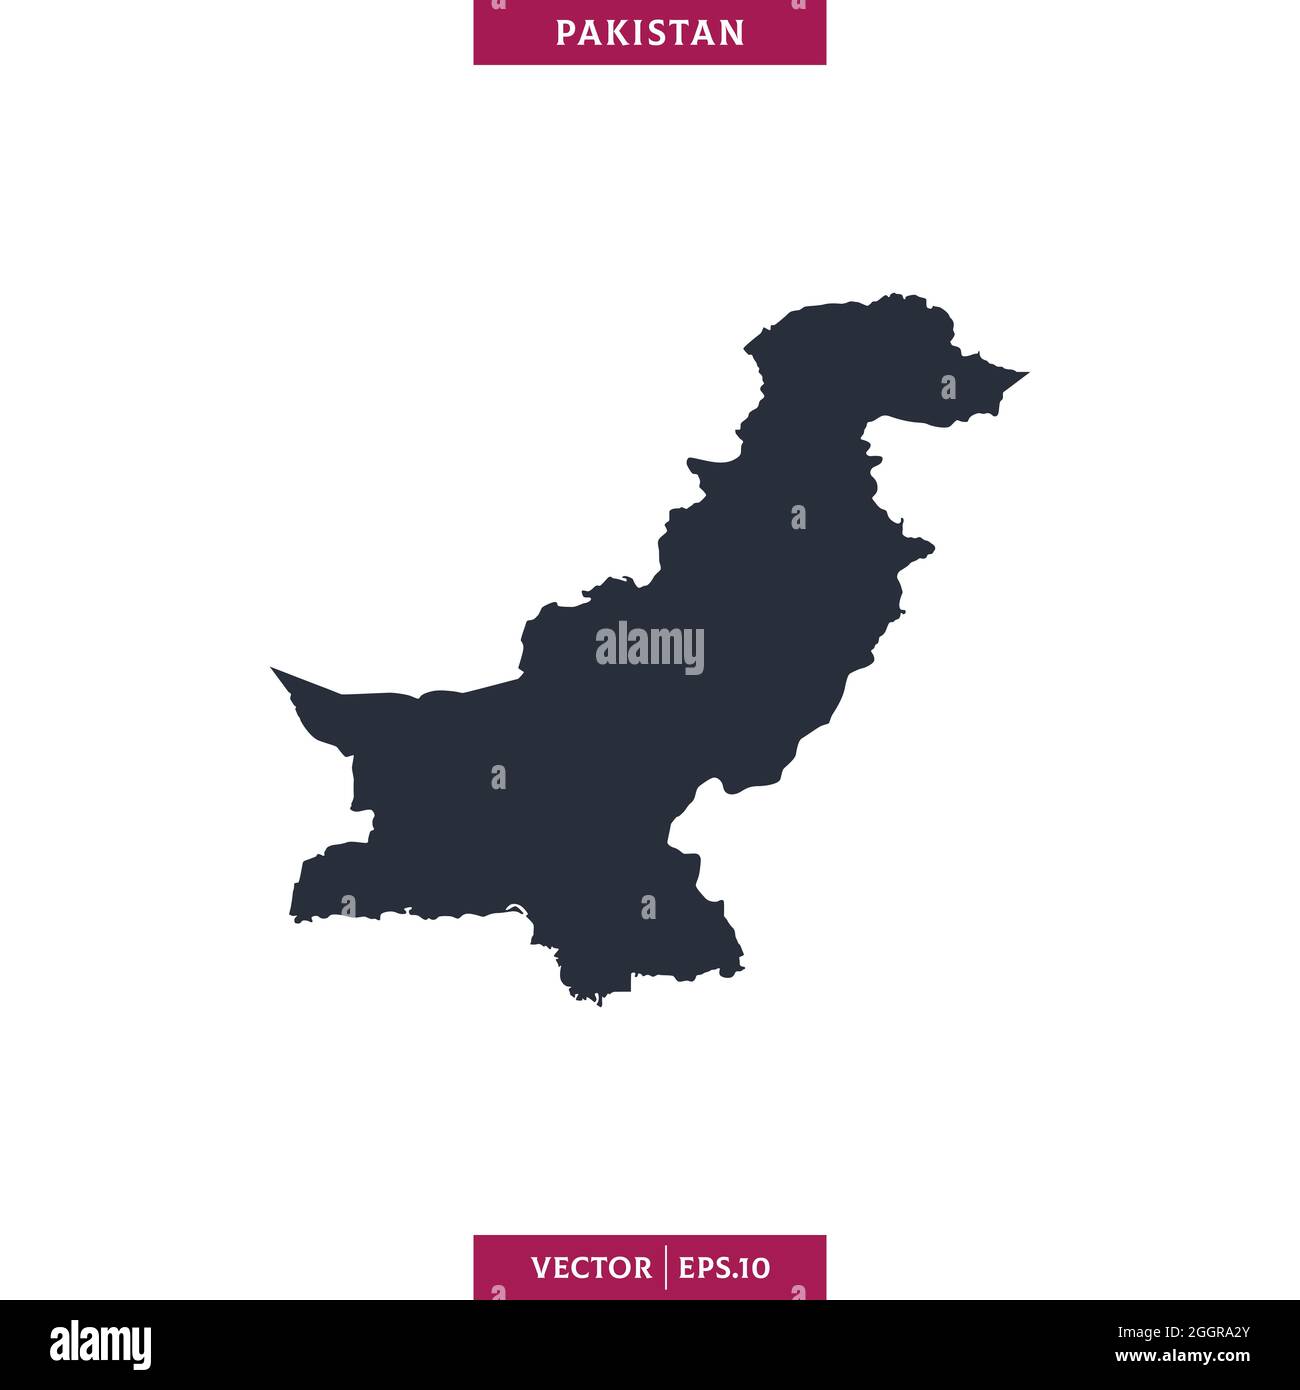 Detailed map of Pakistan vector stock illustration design template. Vector eps 10. Stock Vector